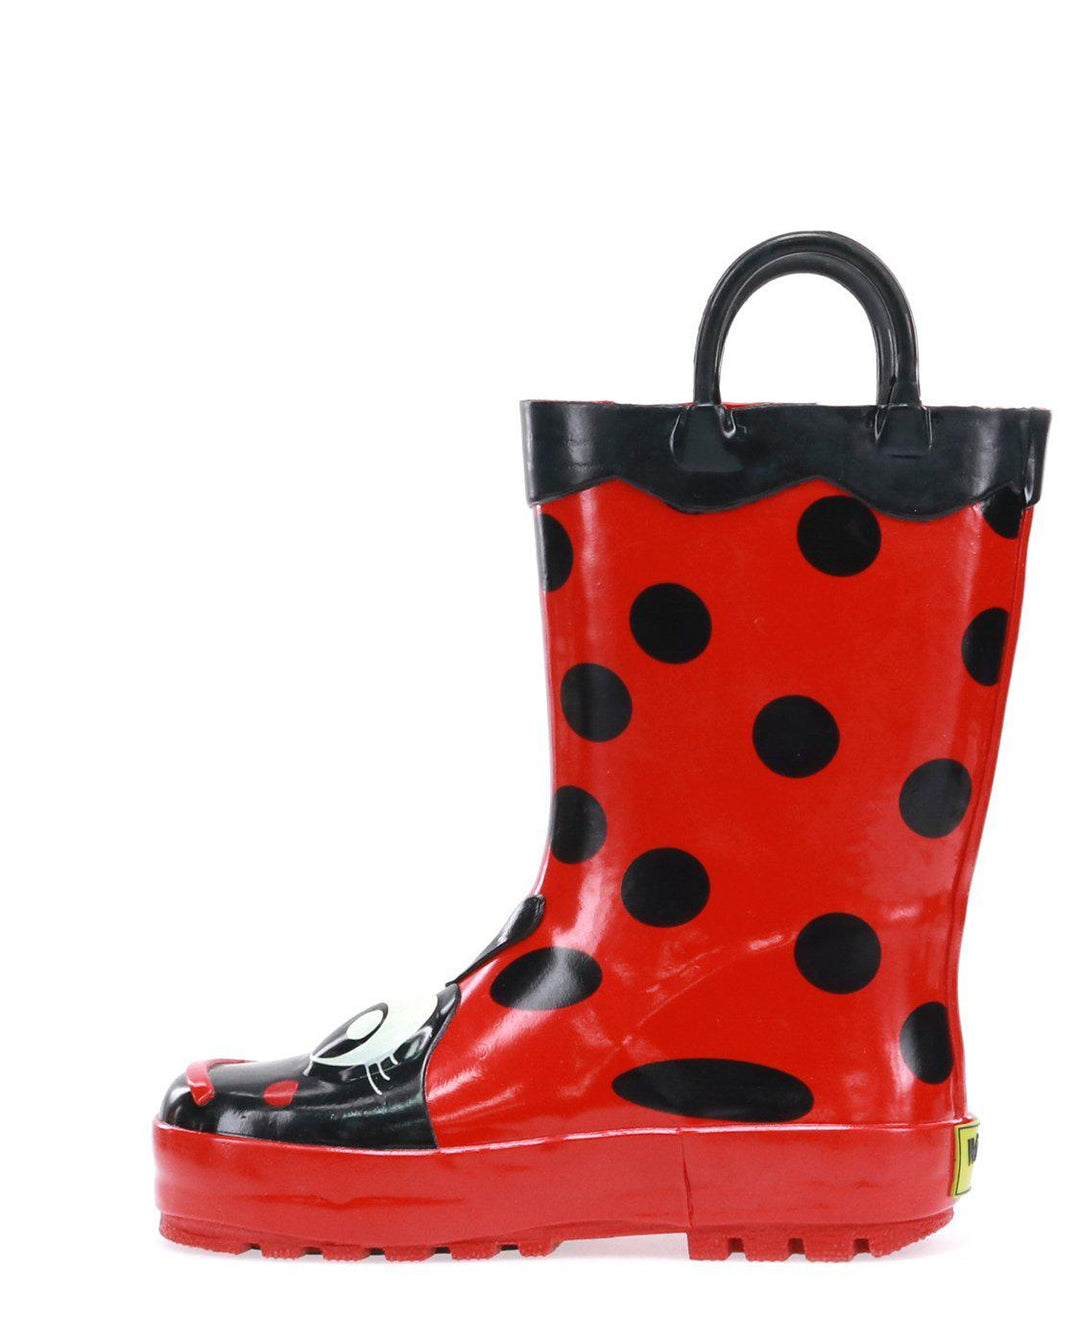 Western Chief Kids Rain Boots | Kids Ladybug Rain Boots - Red